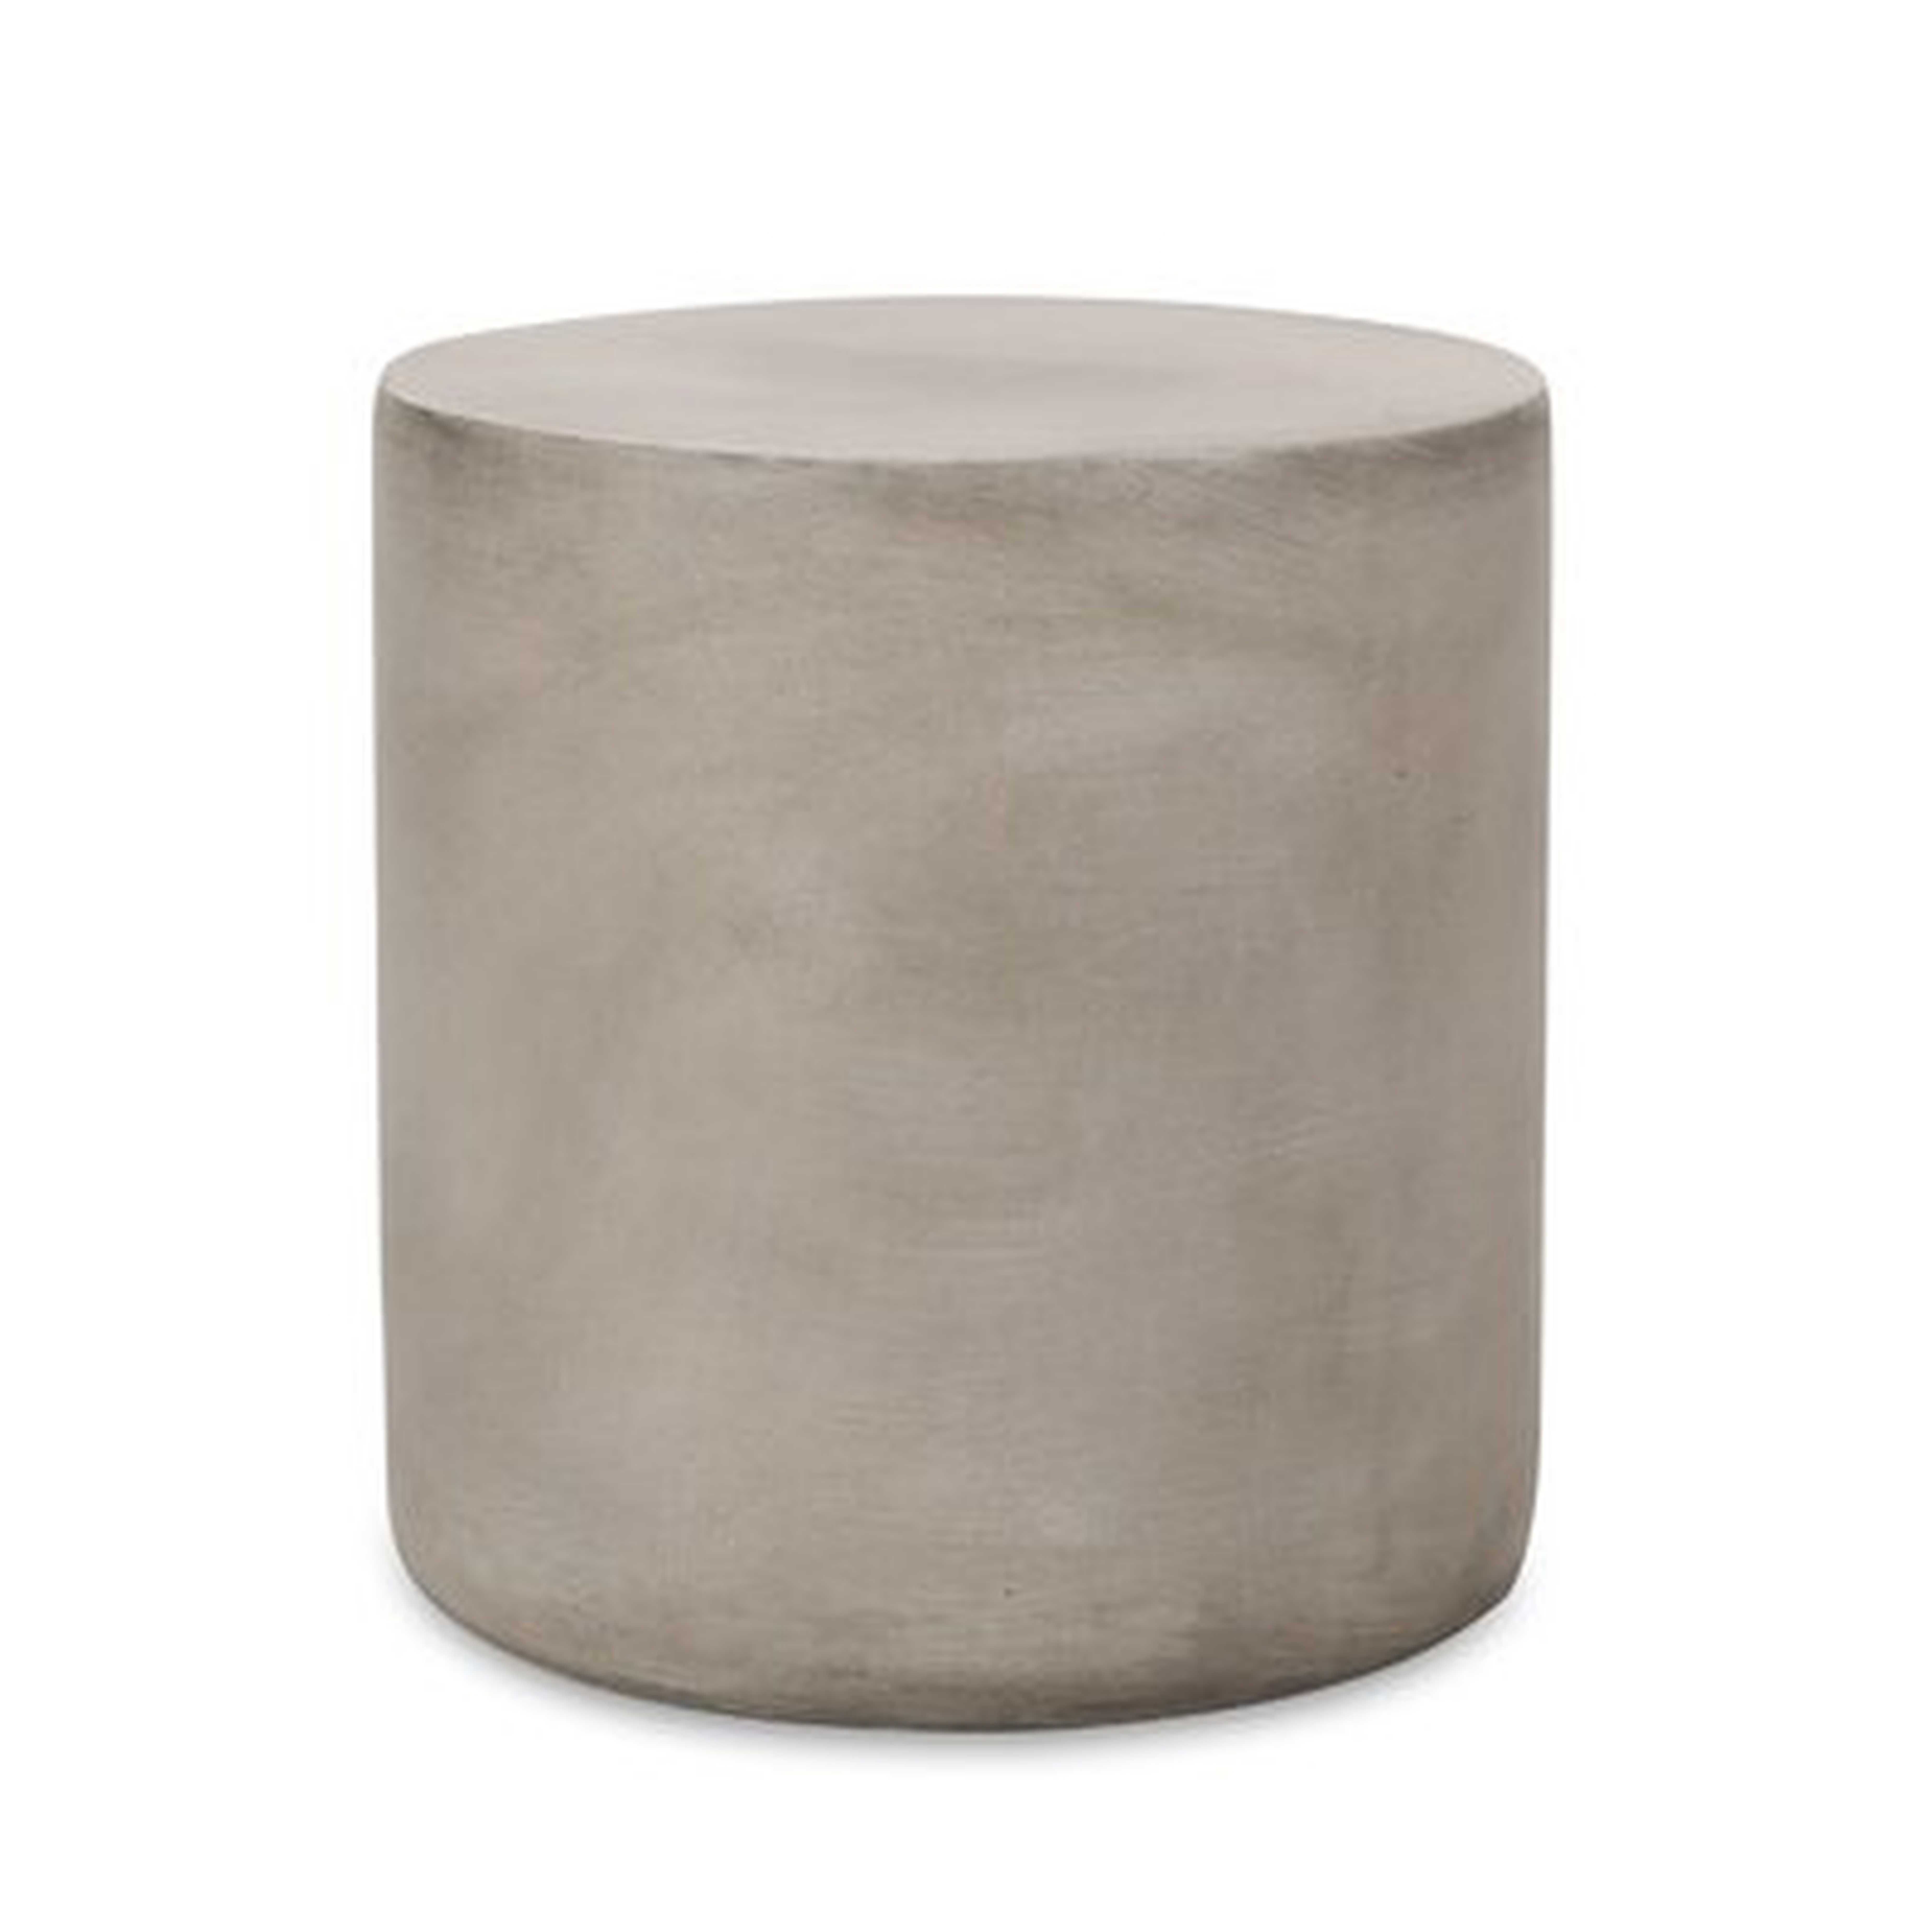 Belsy Stone/Concrete Side Table - Wayfair